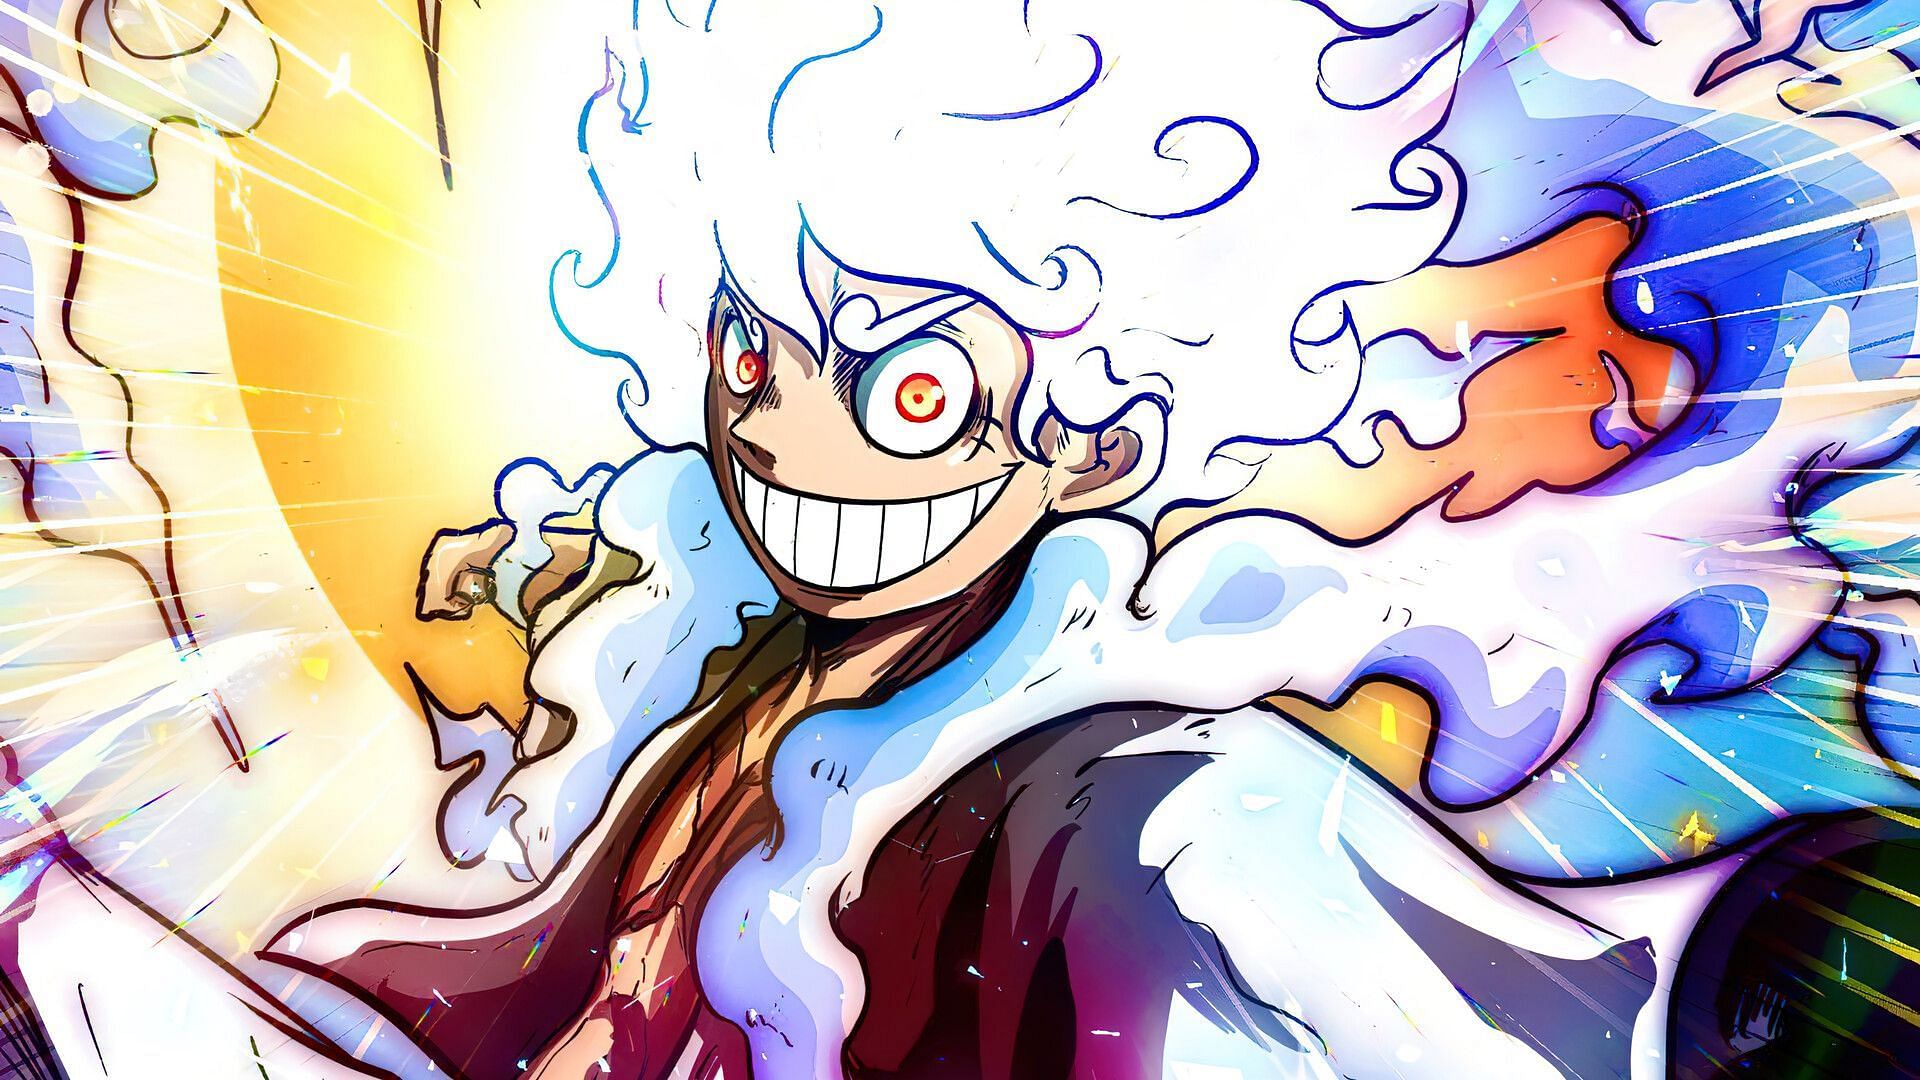 How to make Luffy Gear 5 Nika Sun God One Piece on ROBLOX 